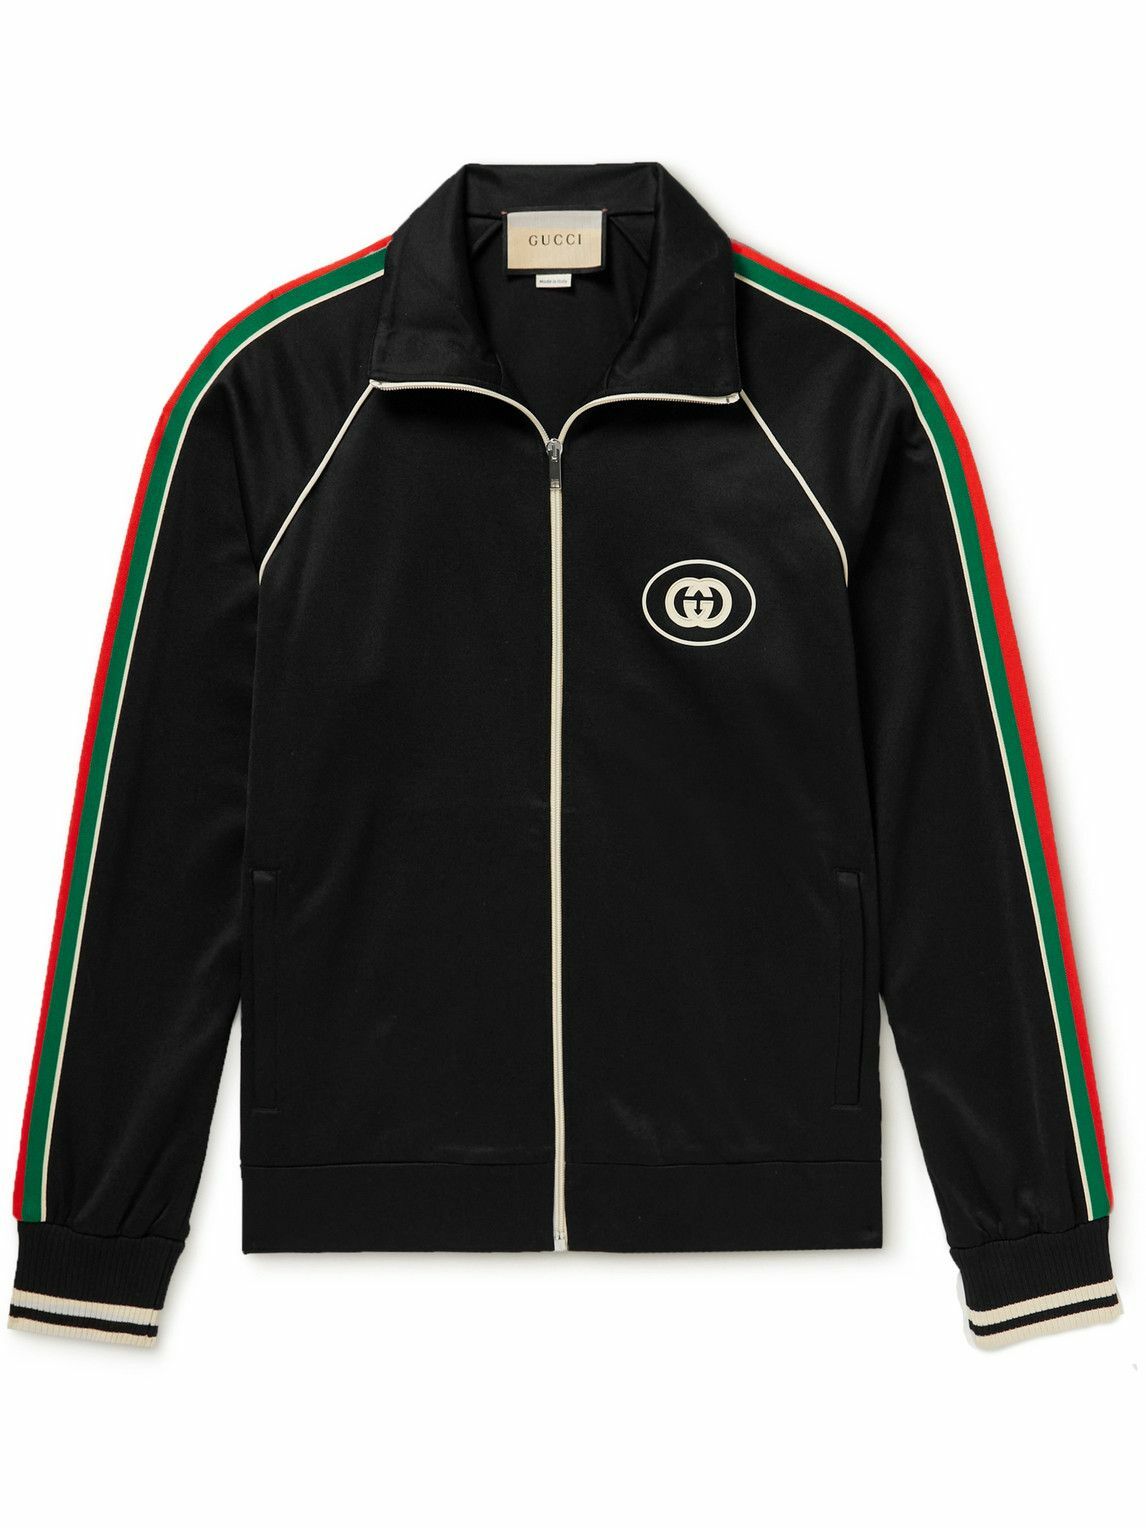 GUCCI - Logo-Appliquéd Striped Tech-Jersey Track Jacket - Black Gucci